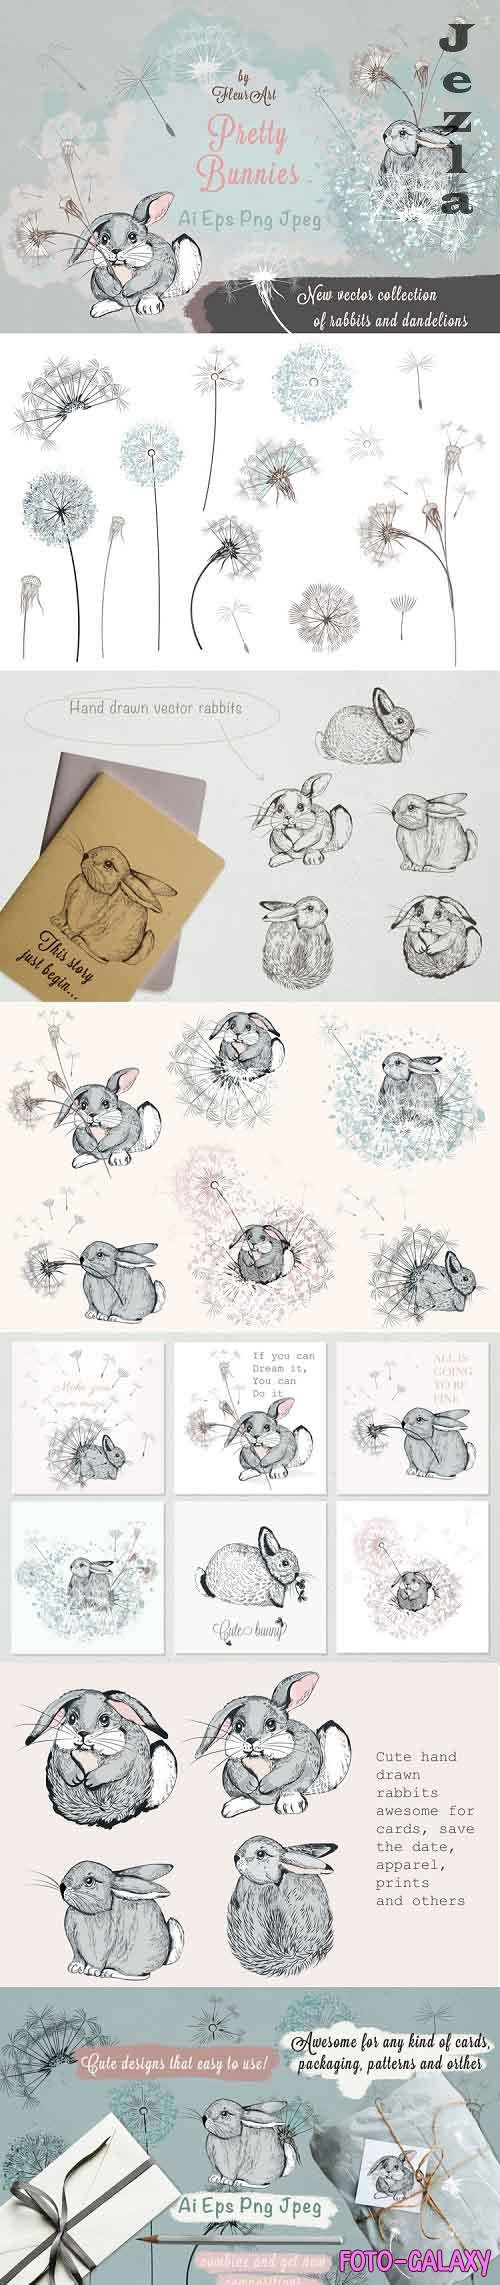 Pretty bunnies vector illustrations set  - 561658